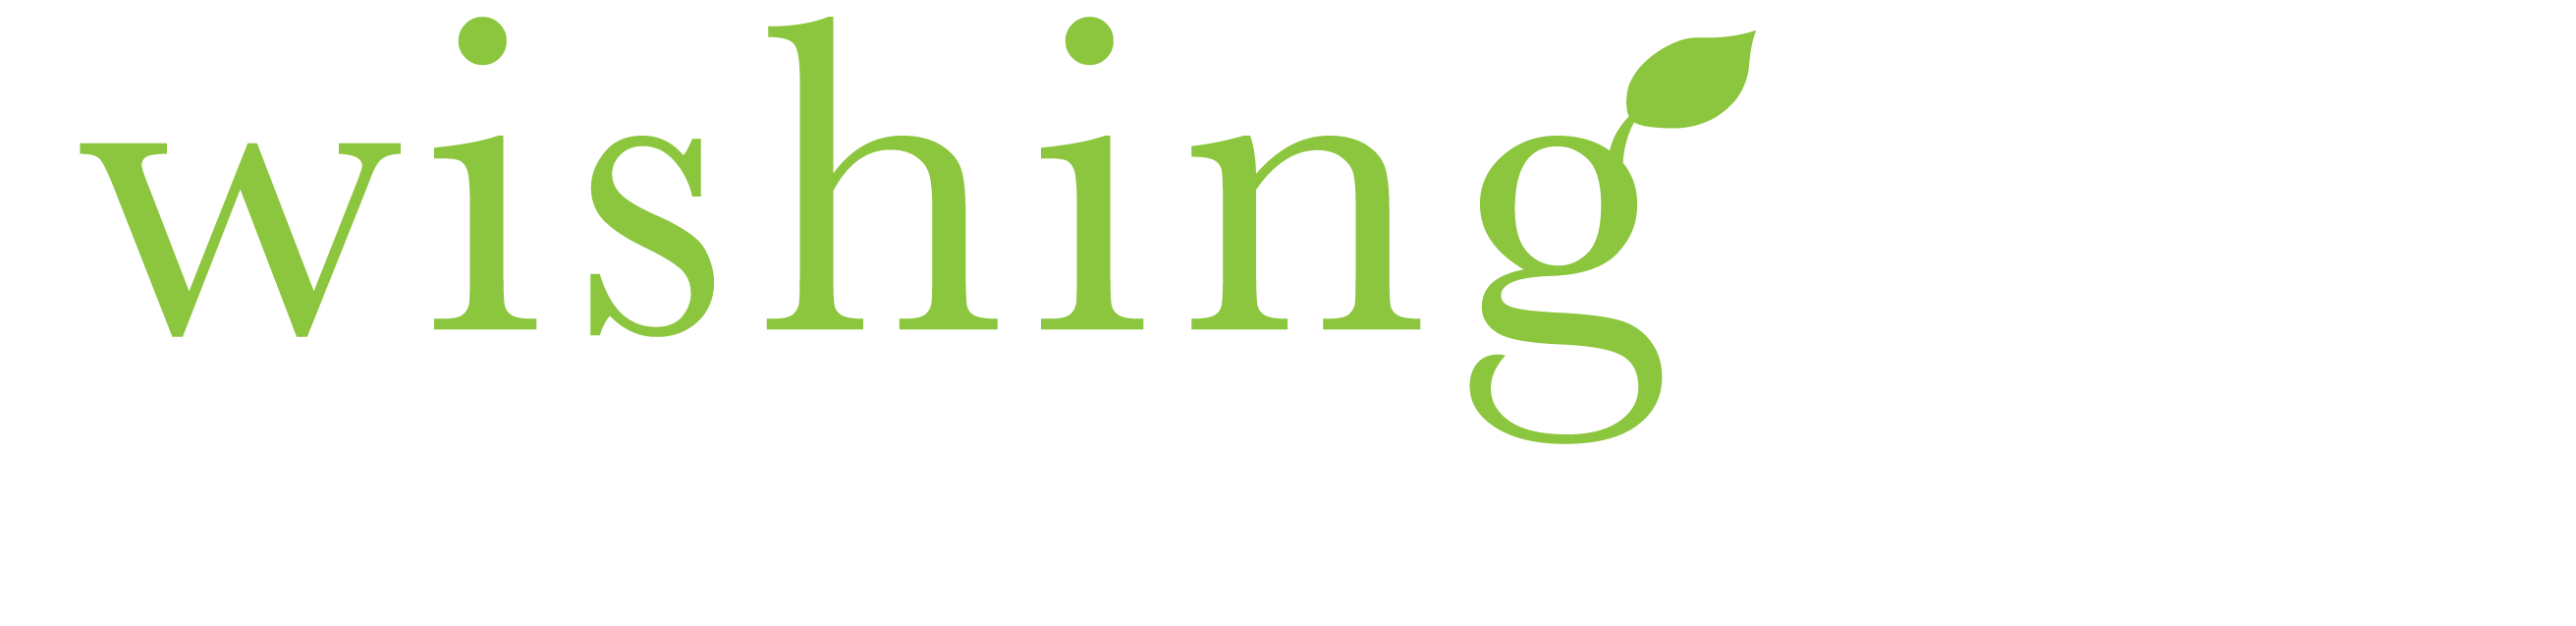 Wishing Tree Productions Logo